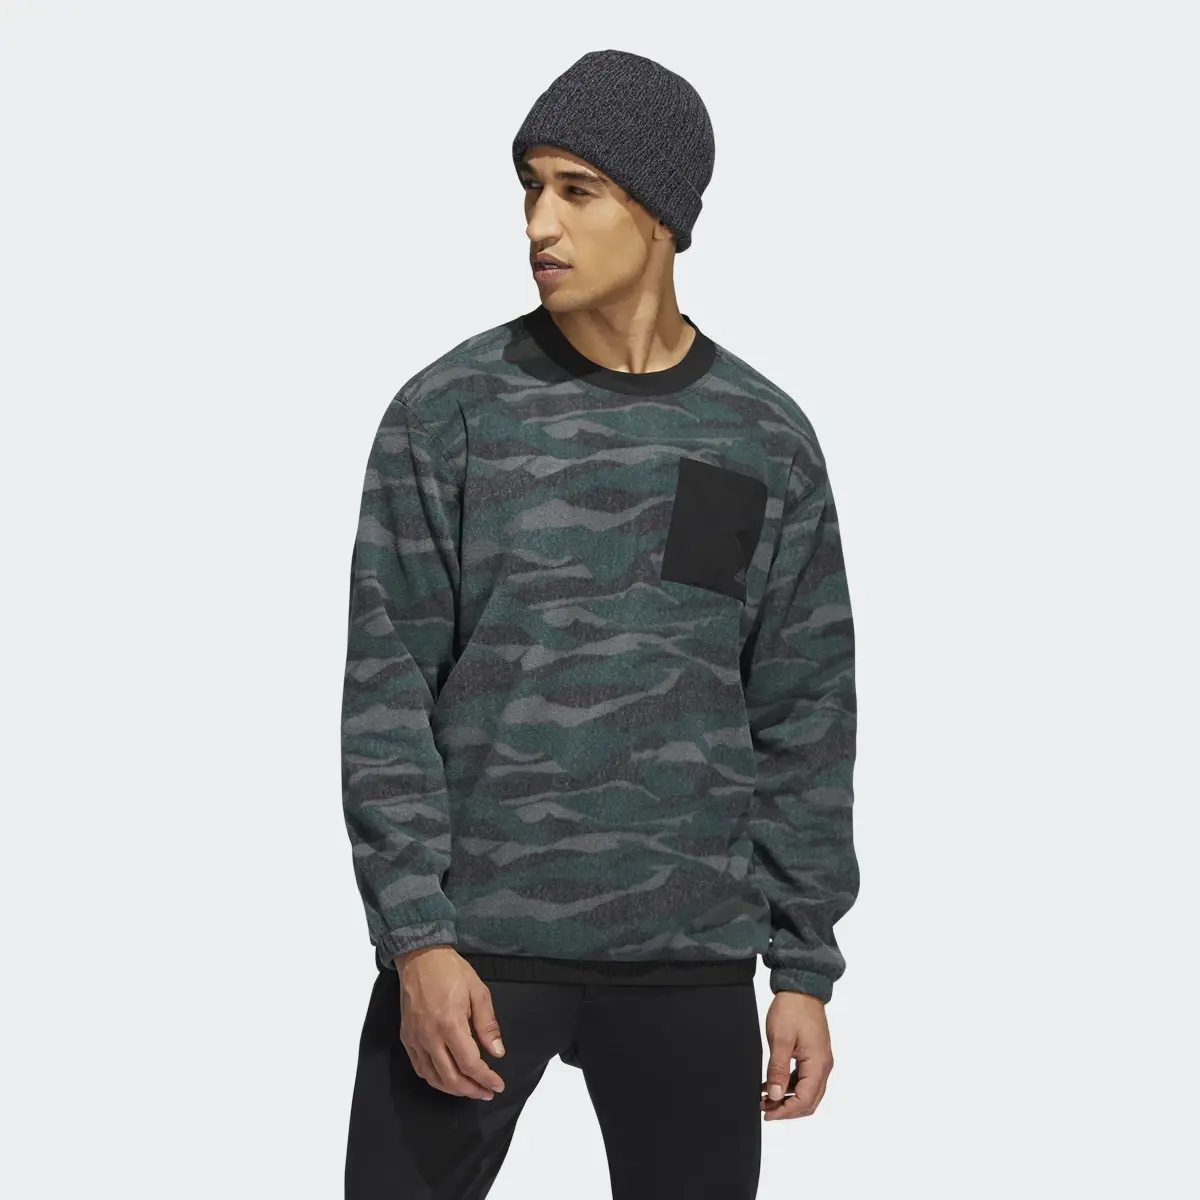 Adidas Texture-Print Sweatshirt. 2